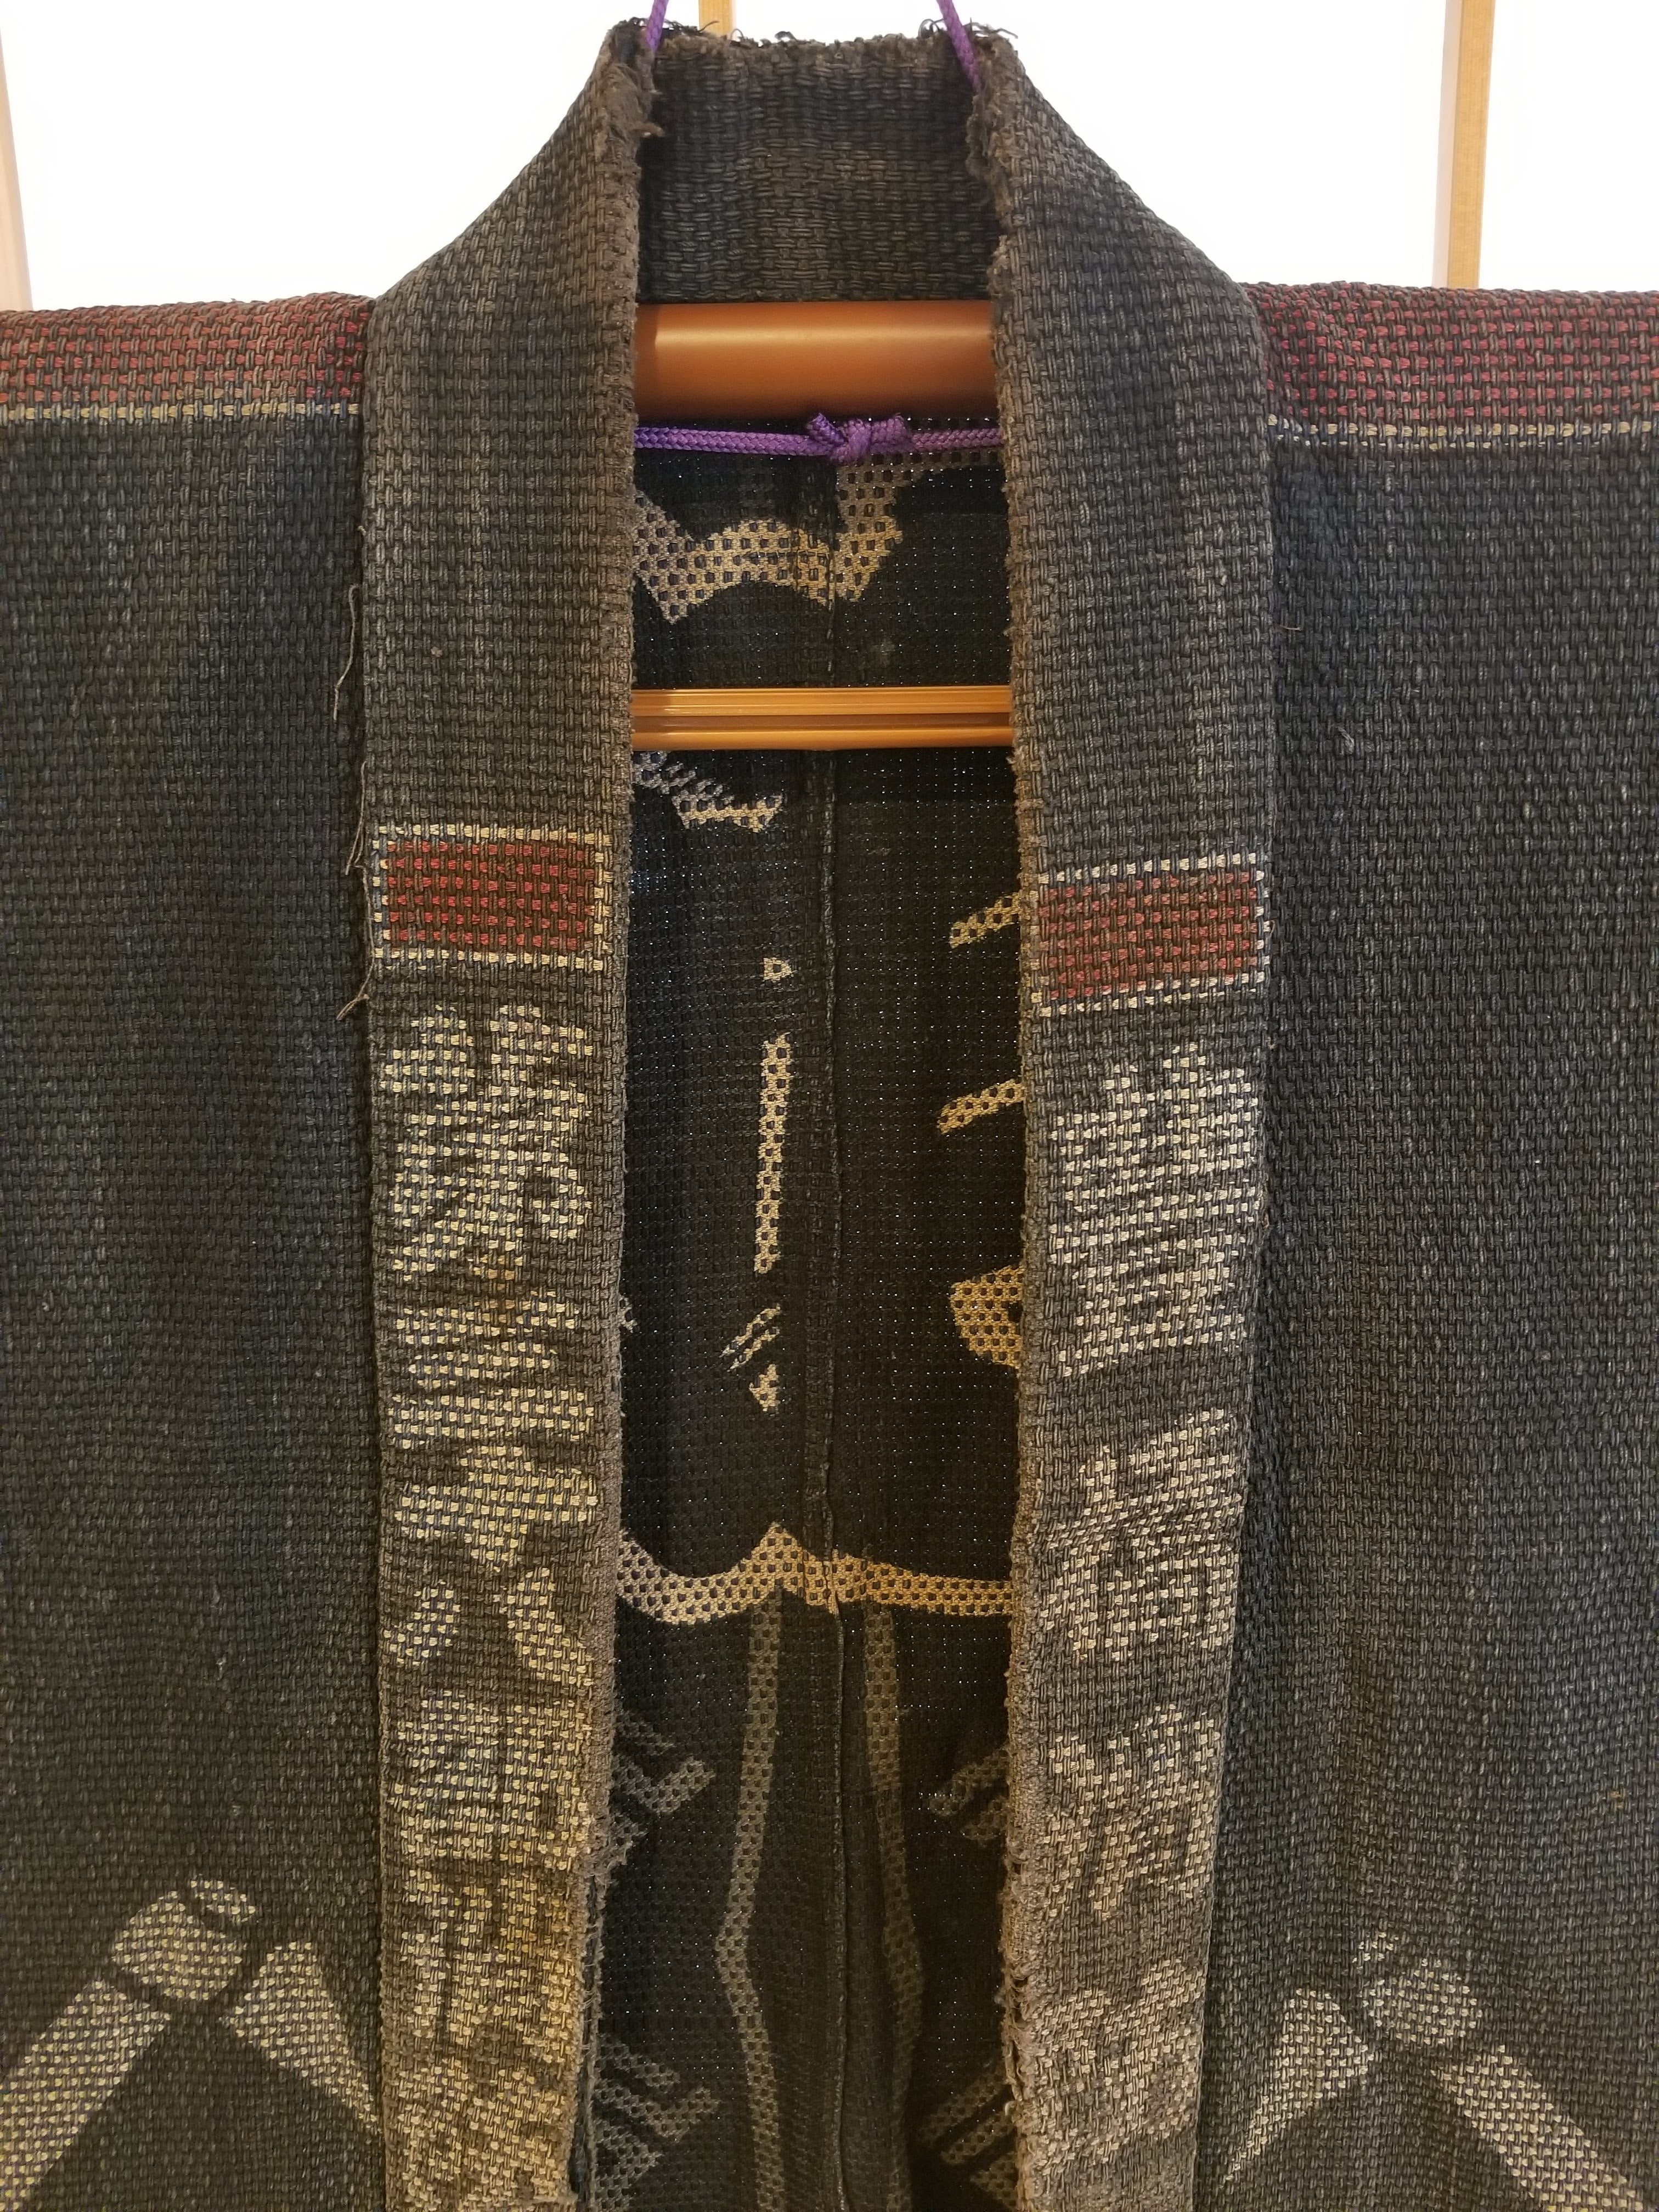 Early Showa Period Japanese Axe Print Reversible Fireman Jacket - Siamurai